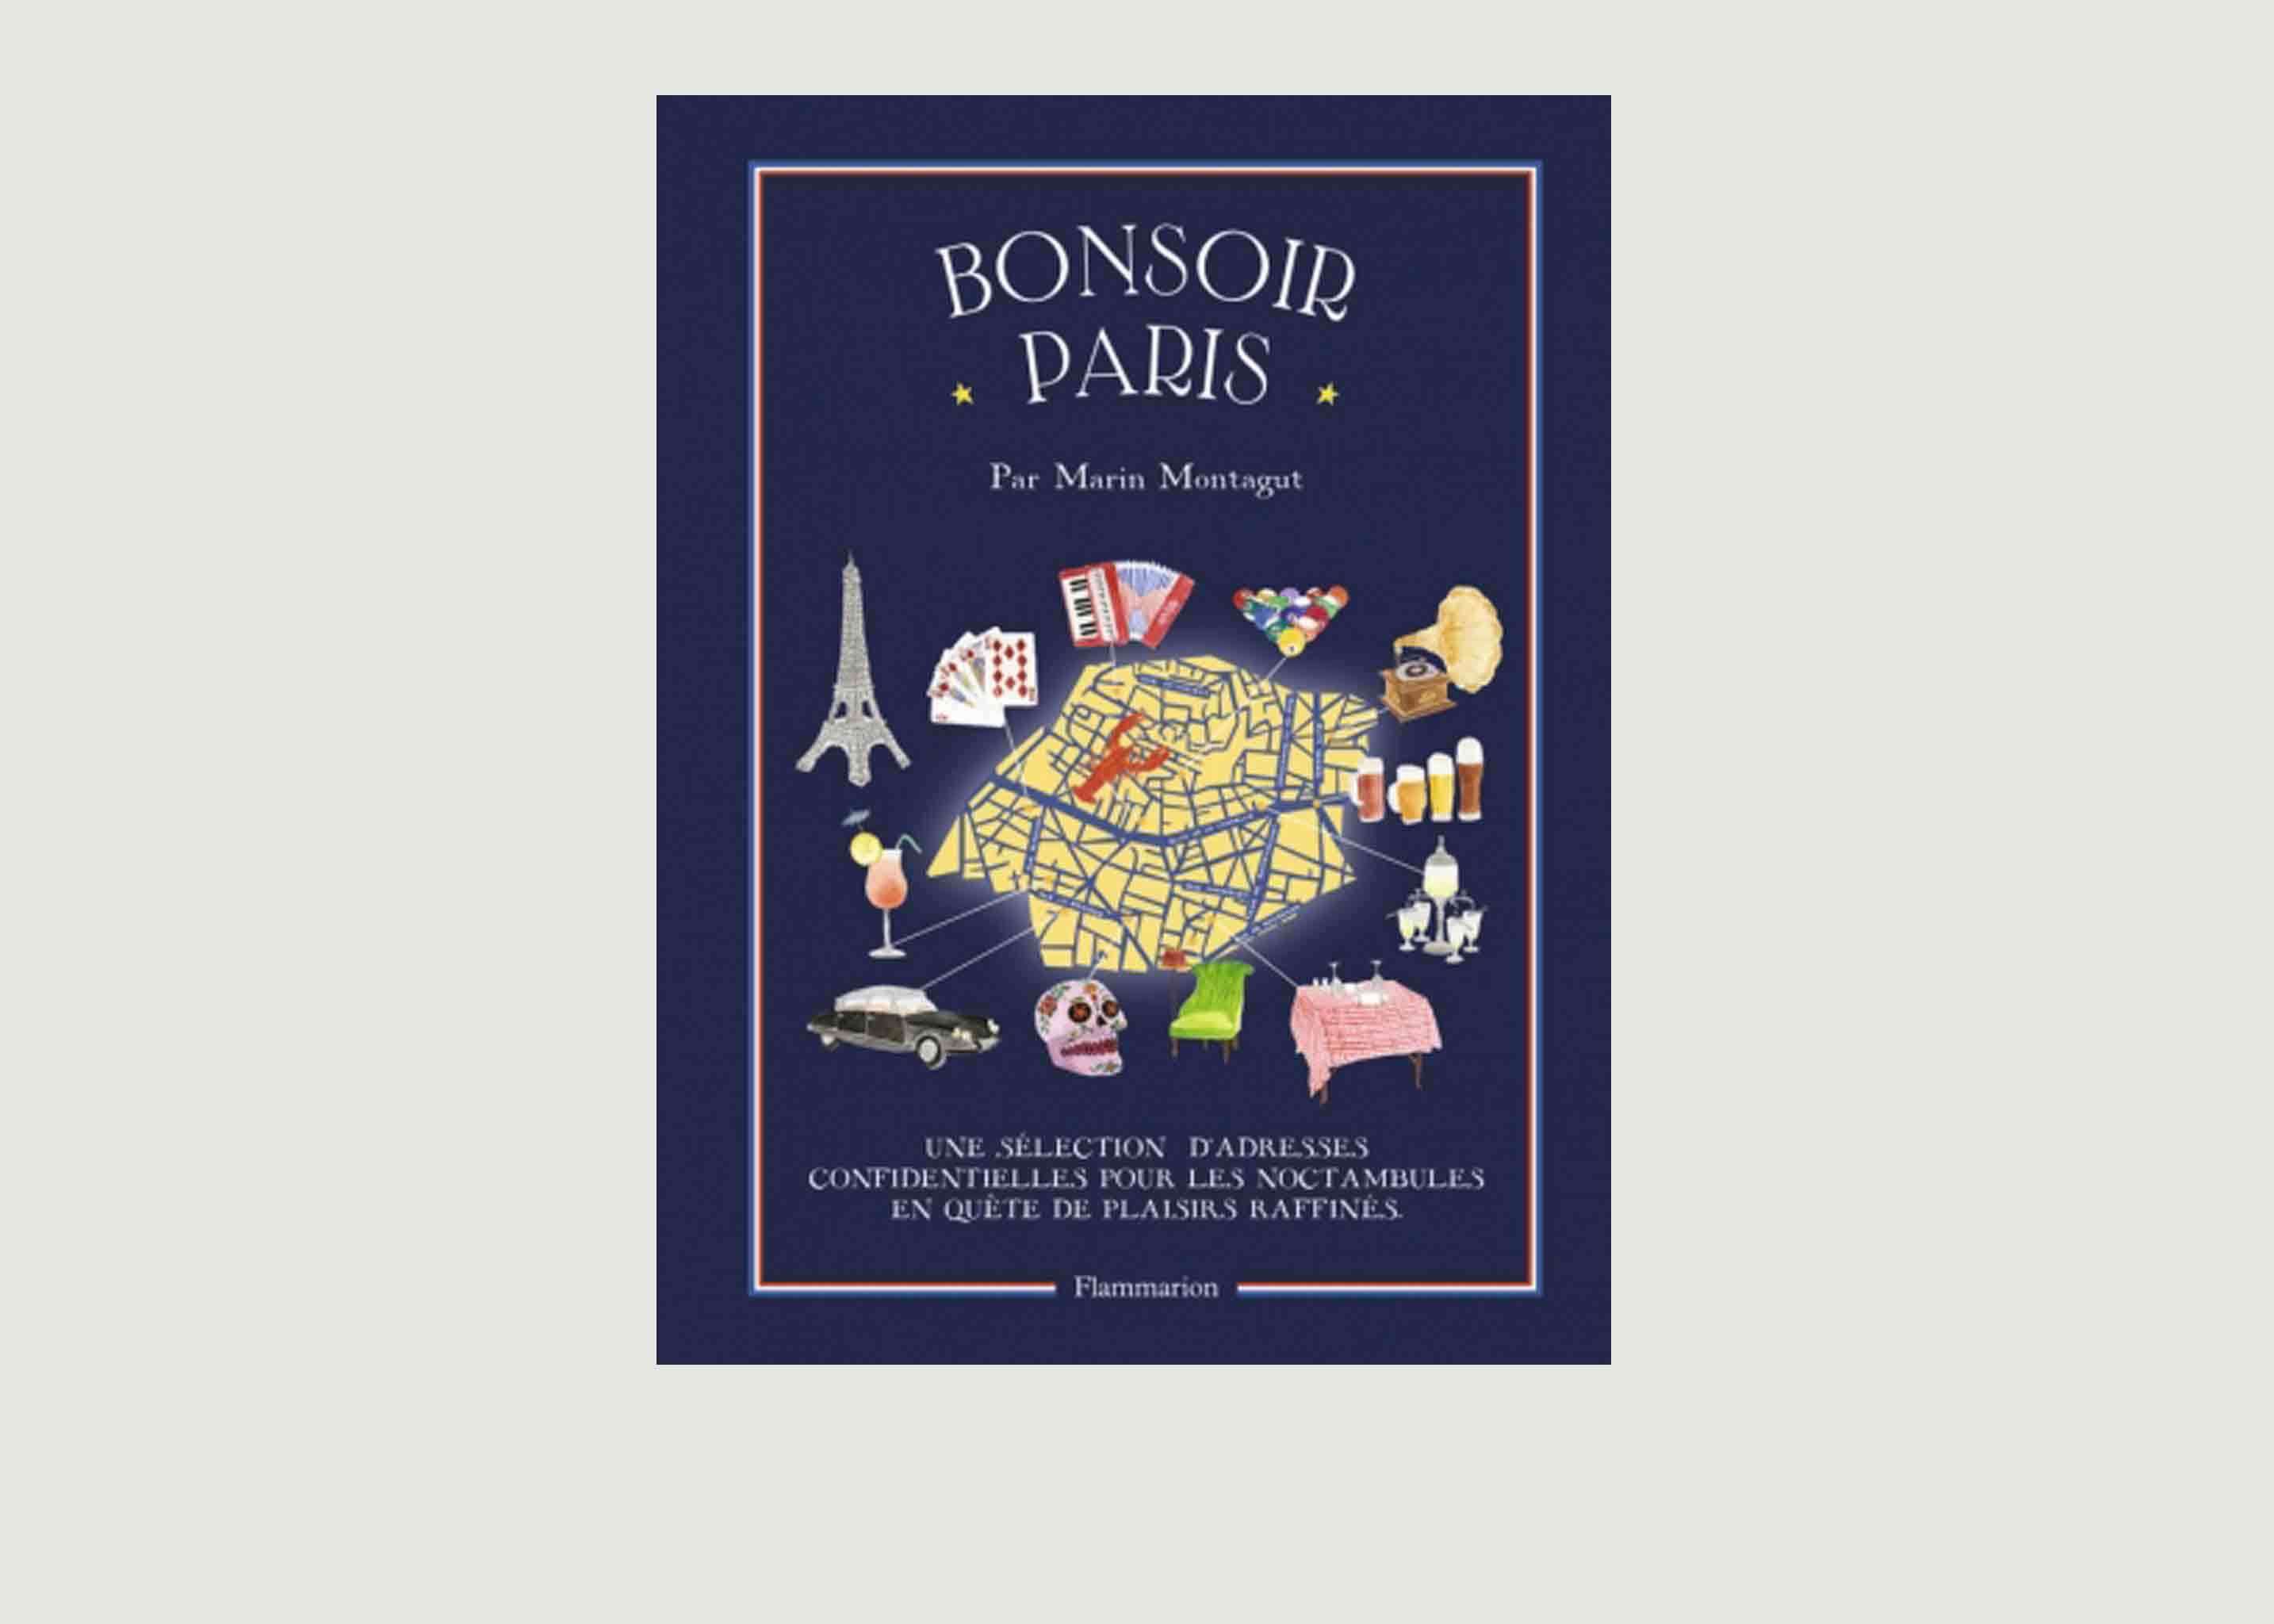 Bonsoir Paris Guide (German Edition) - Flammarion